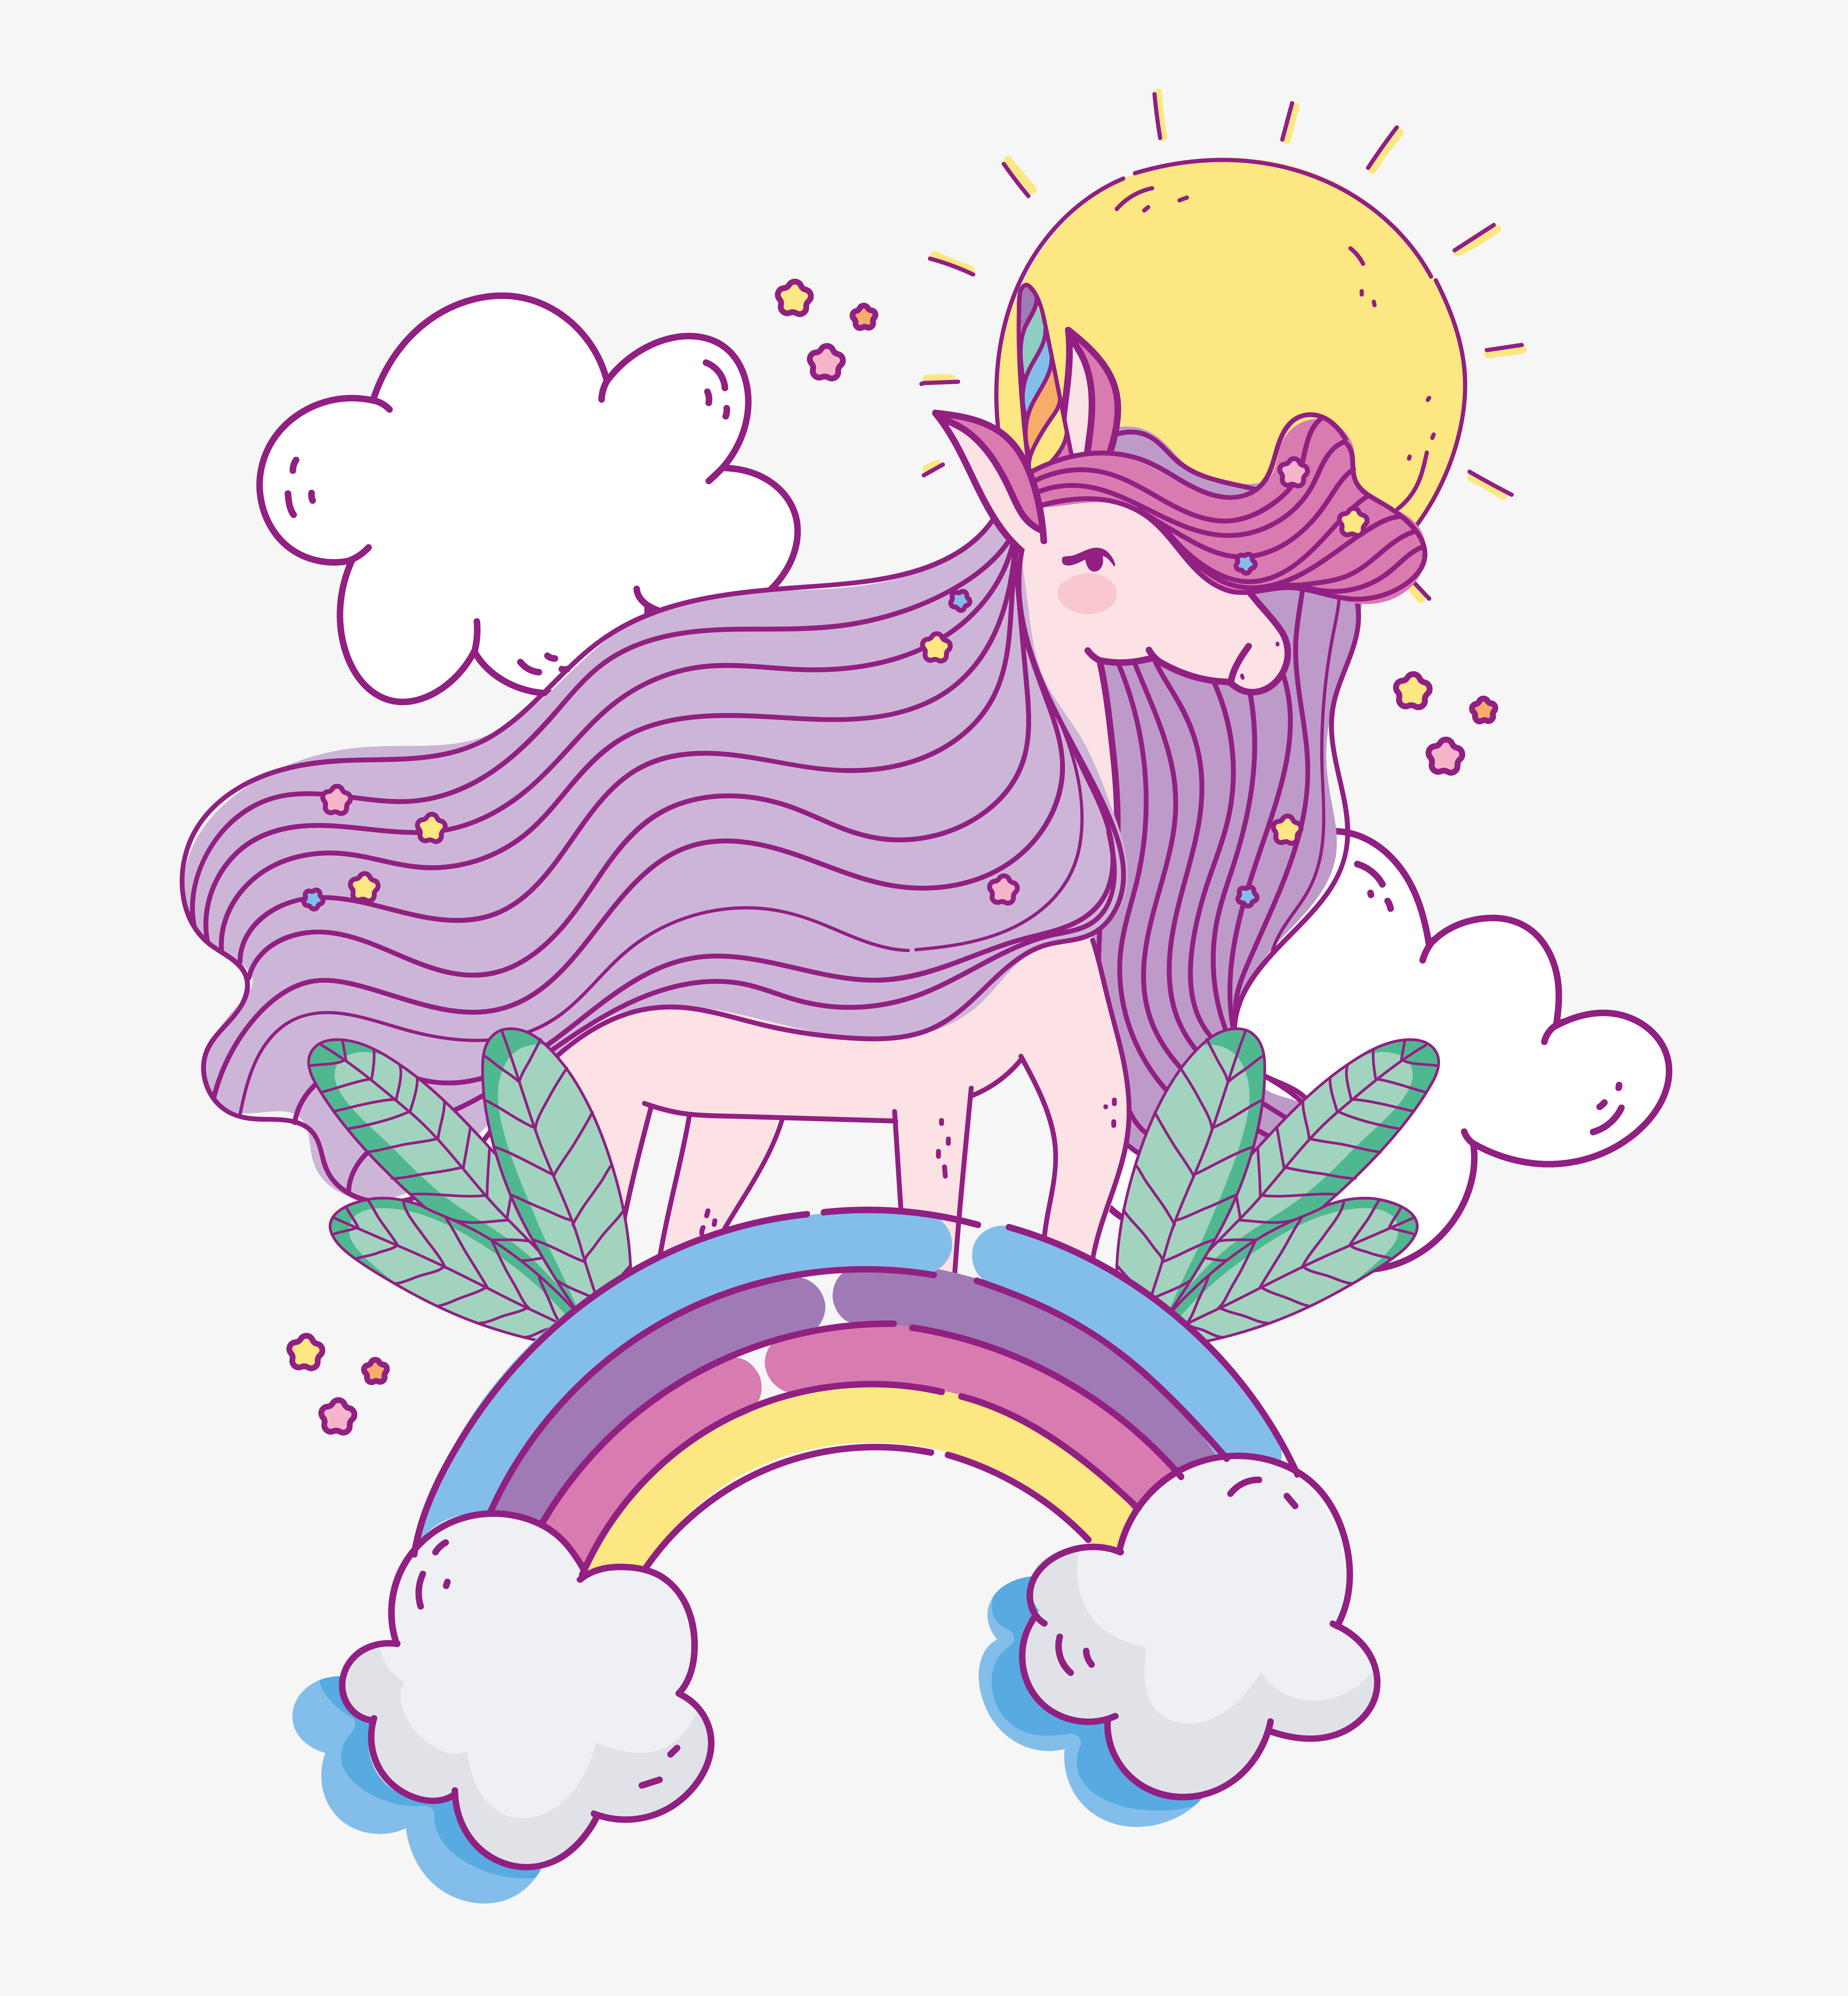 Download Cute magic unicorn on rainbow - Download Free Vectors, Clipart Graphics & Vector Art